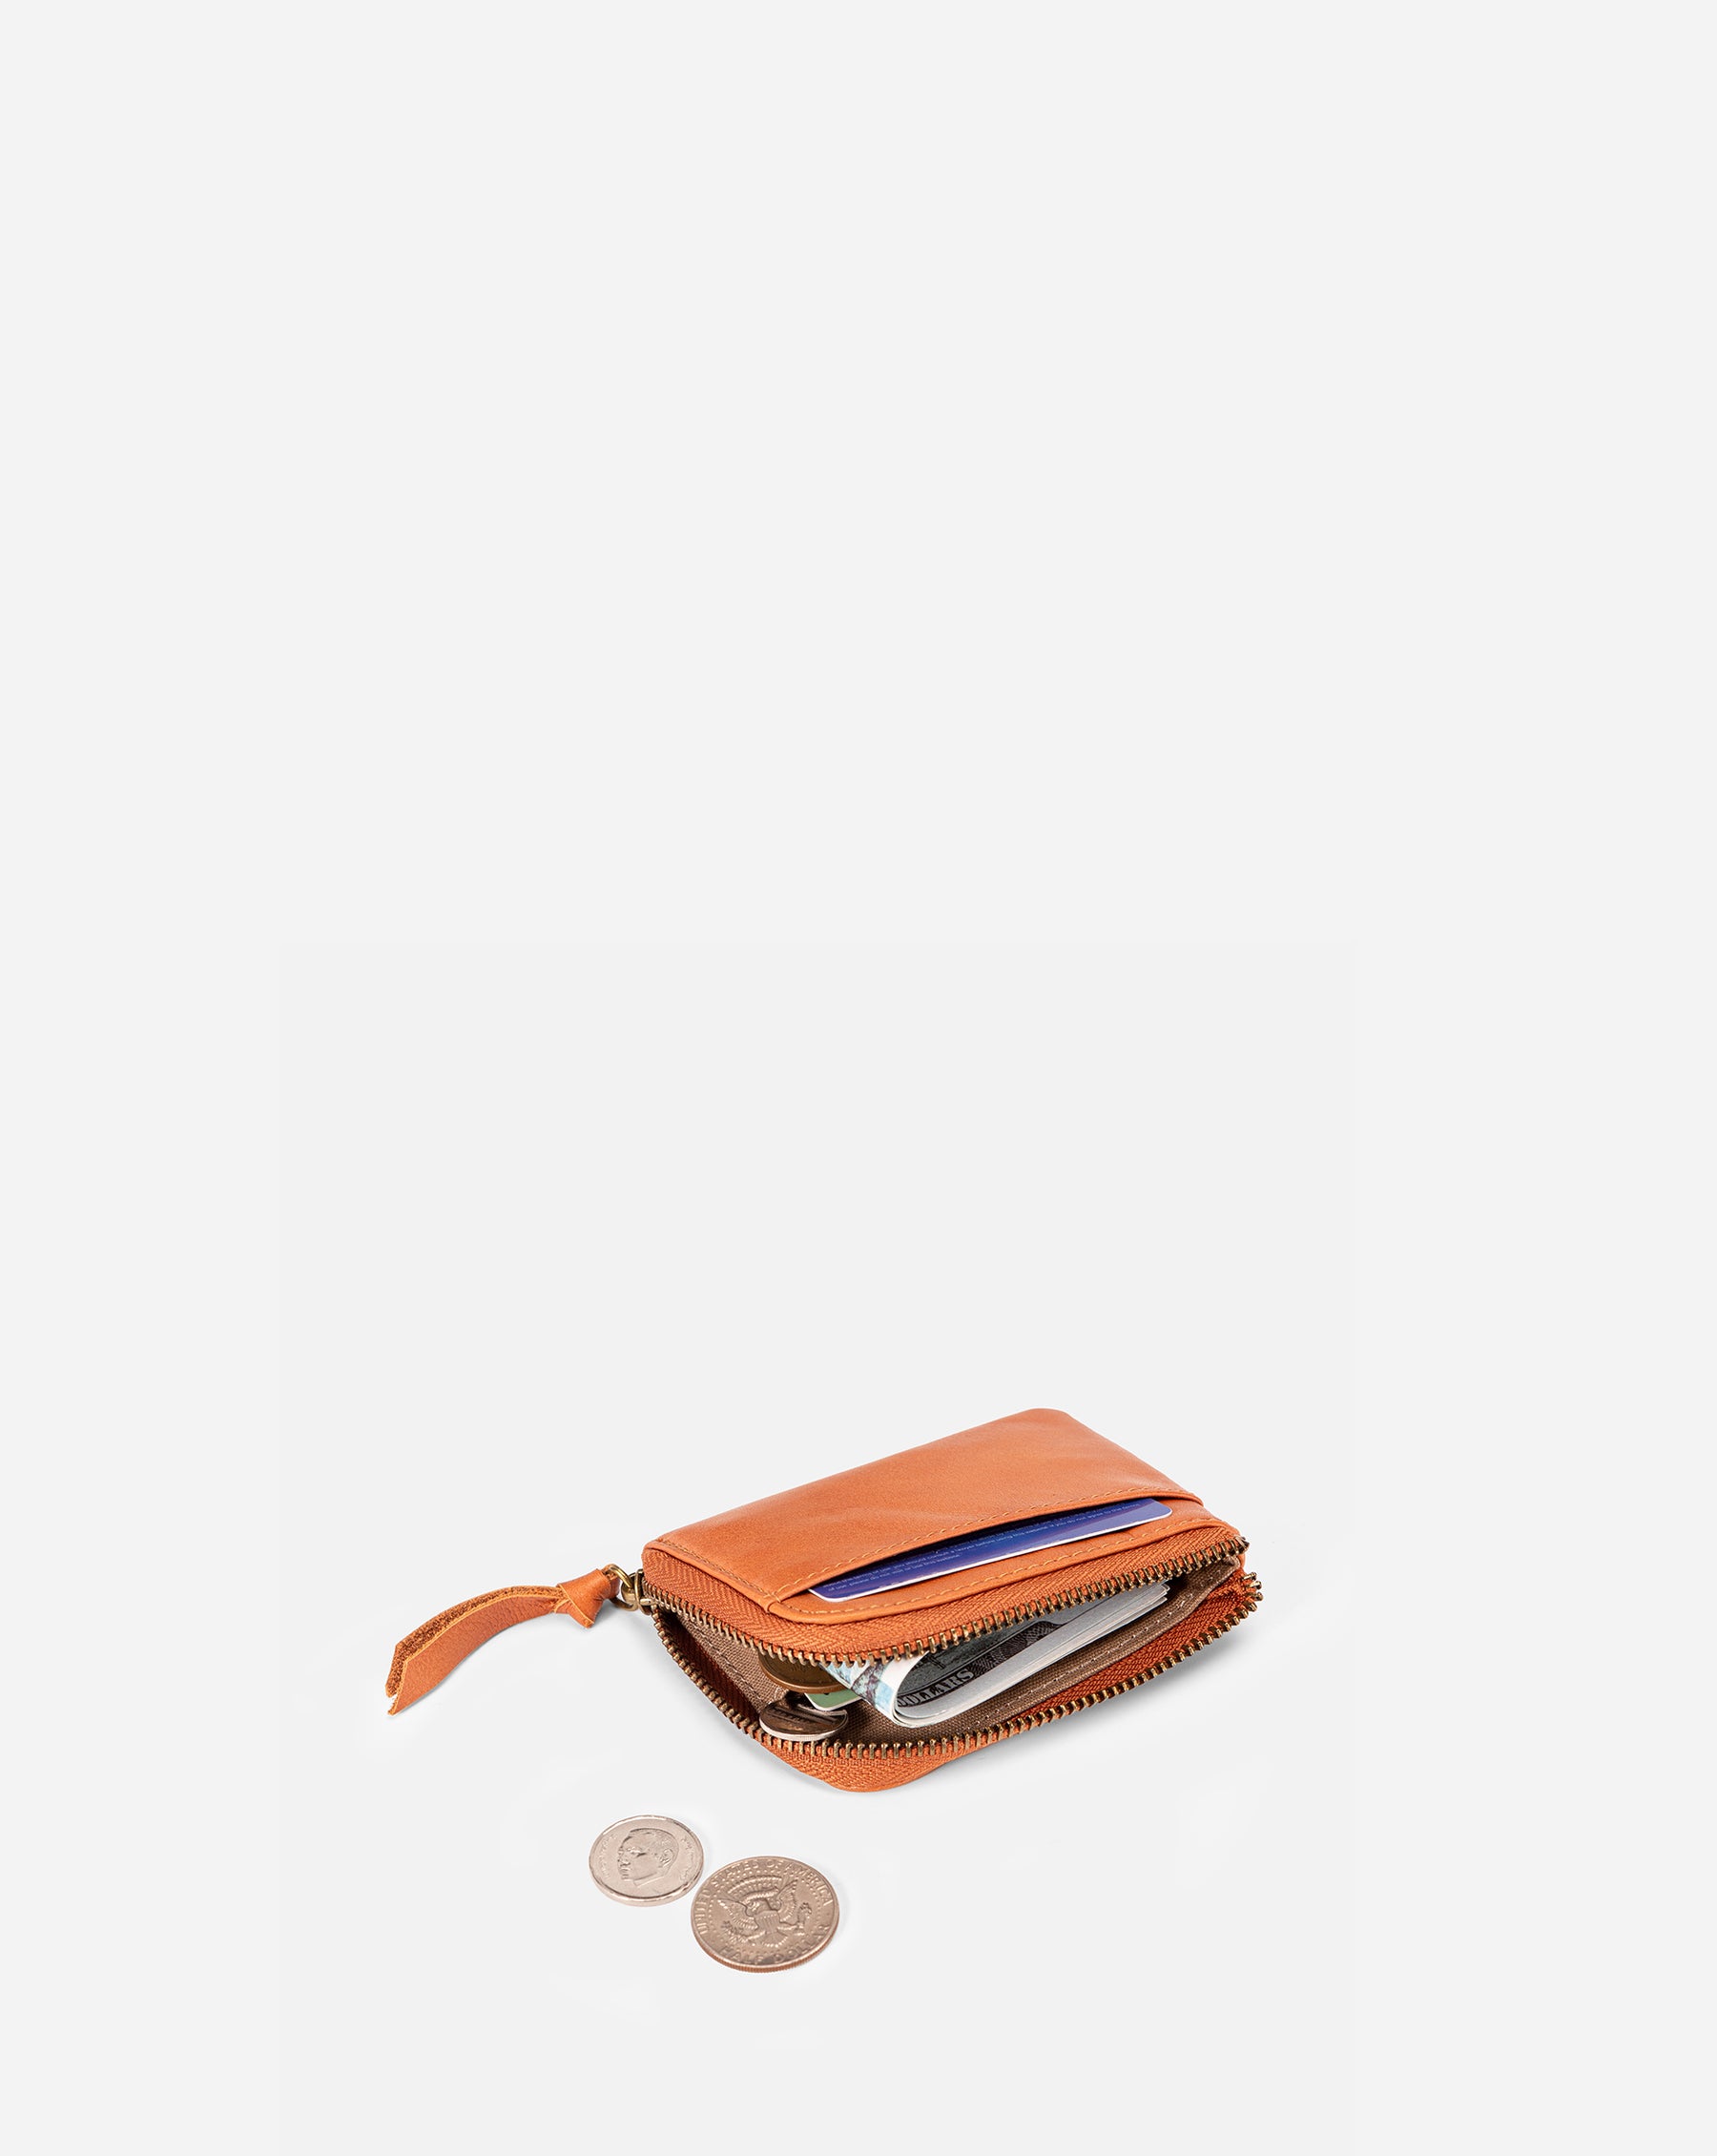 Merope Mini Wallet.